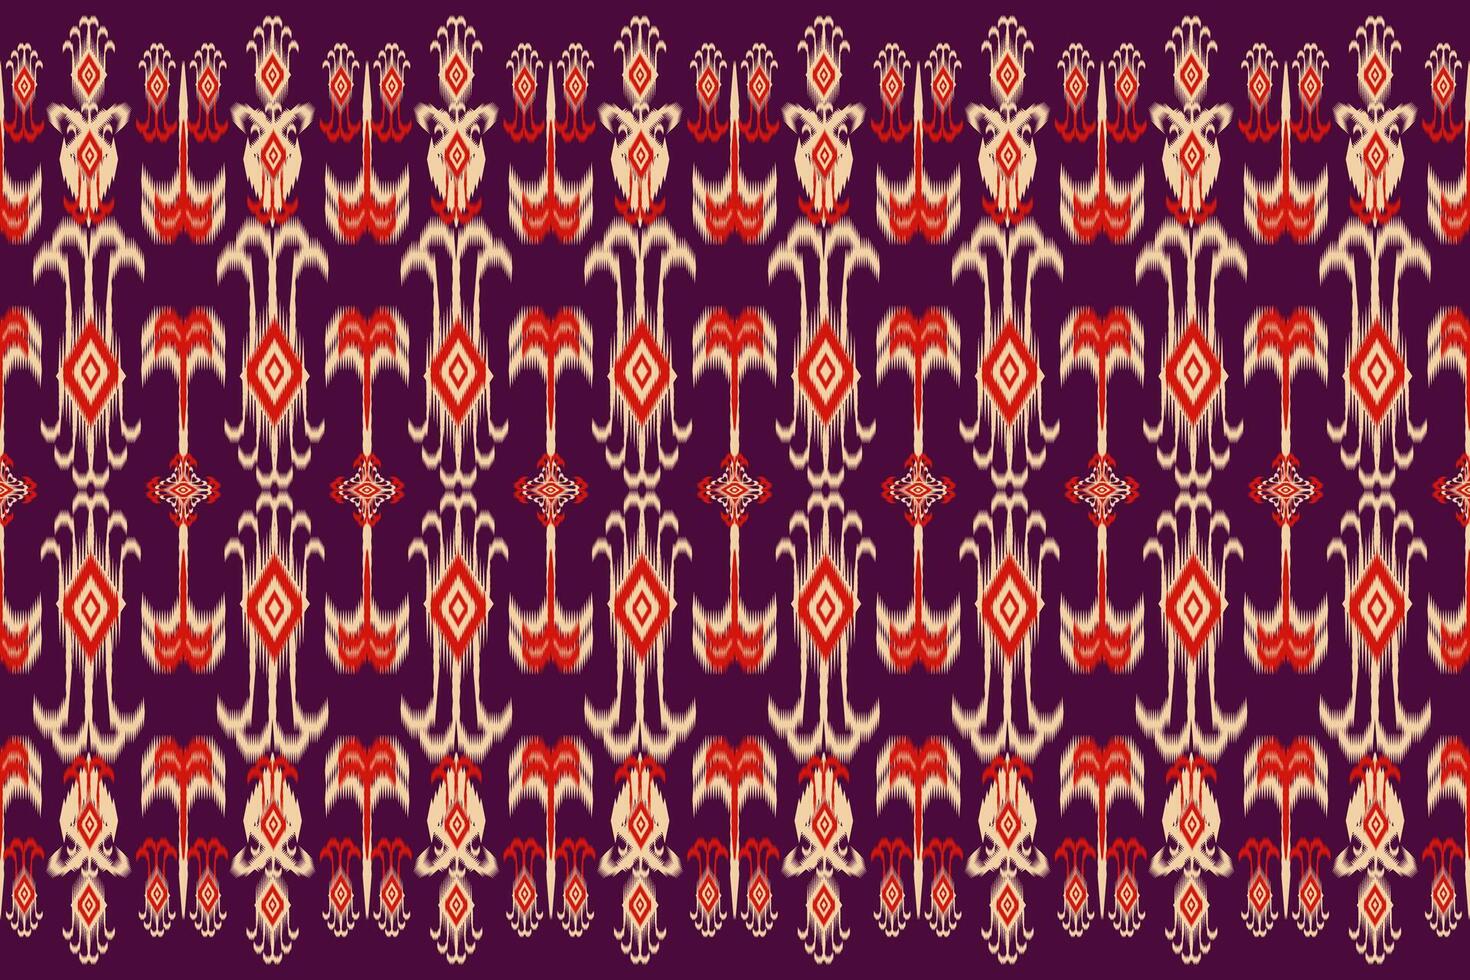 azteca tribal geométrico vector antecedentes sin costura raya modelo. tradicional ornamento étnico estilo. diseño para textil, tela, ropa, cortina, alfombra, ornamento, envase.